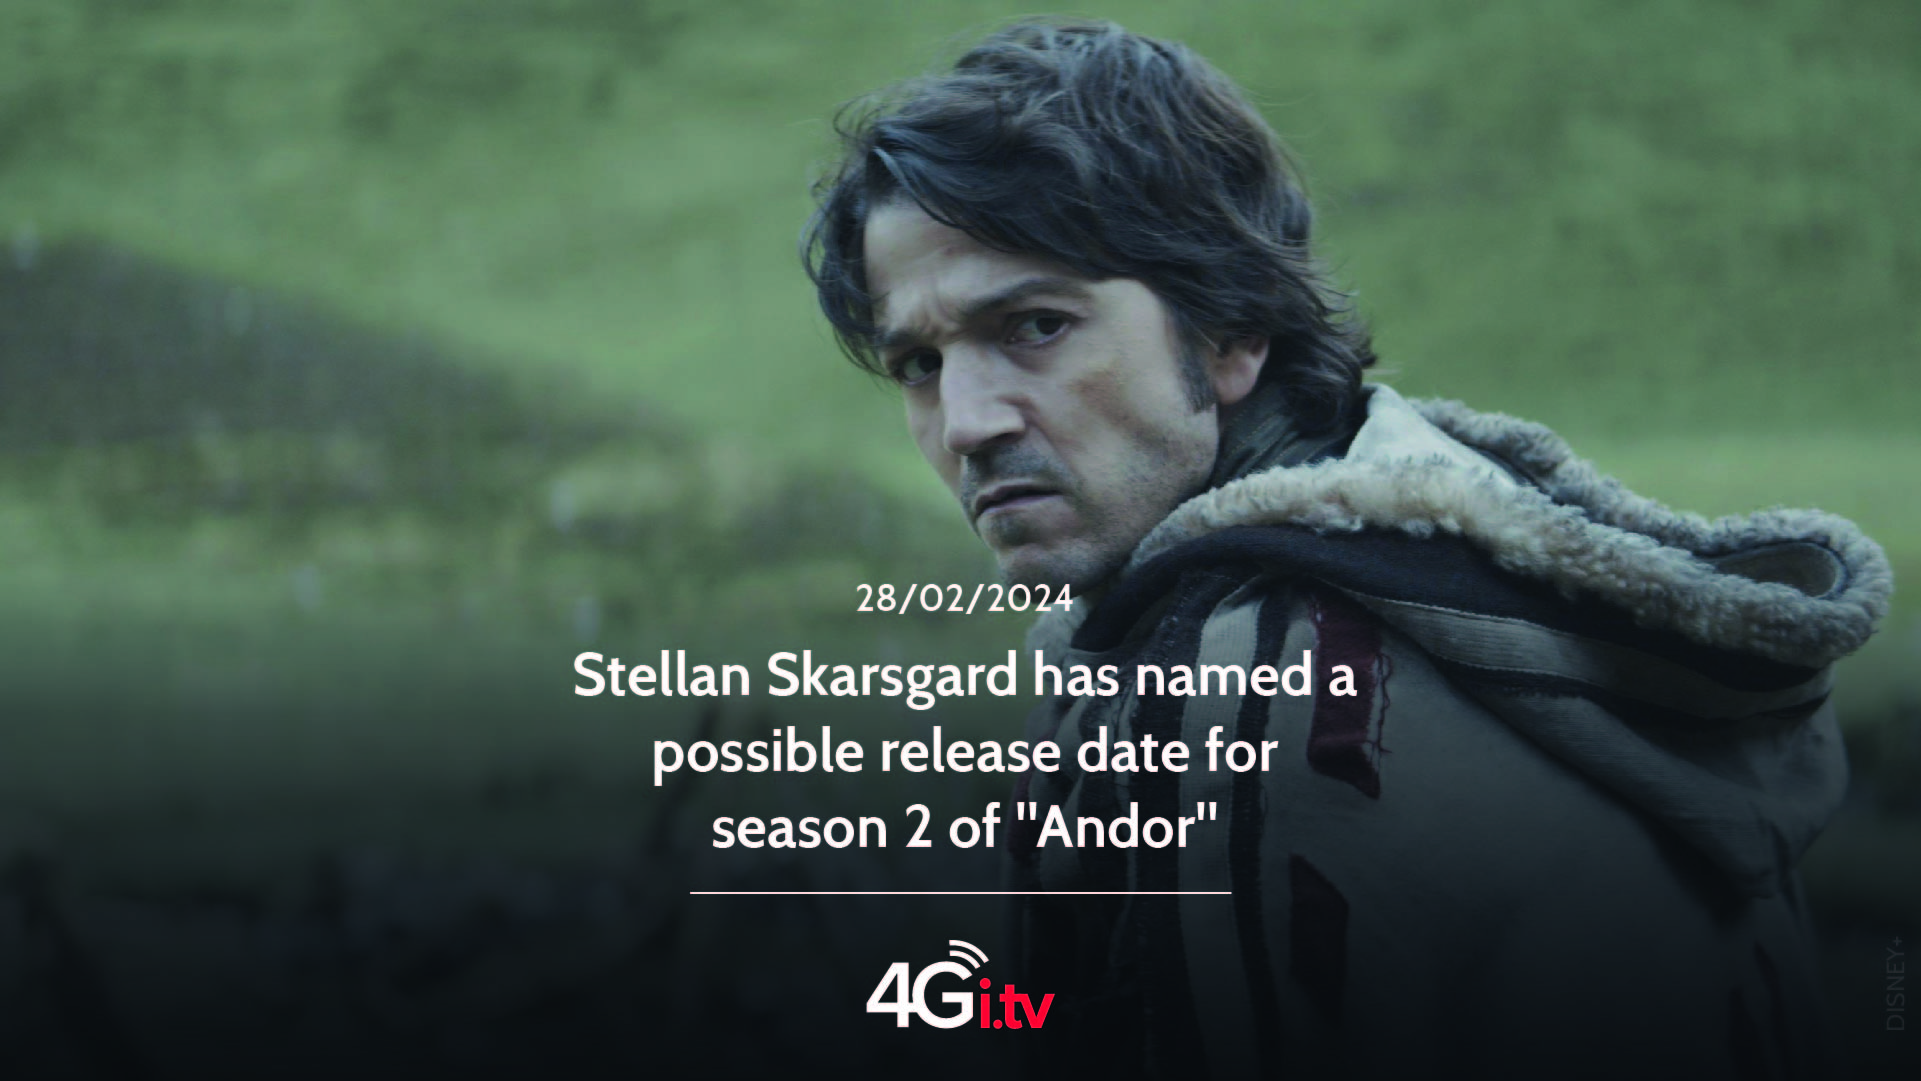 Lesen Sie mehr über den Artikel Stellan Skarsgard has named a possible release date for season 2 of “Andor” 